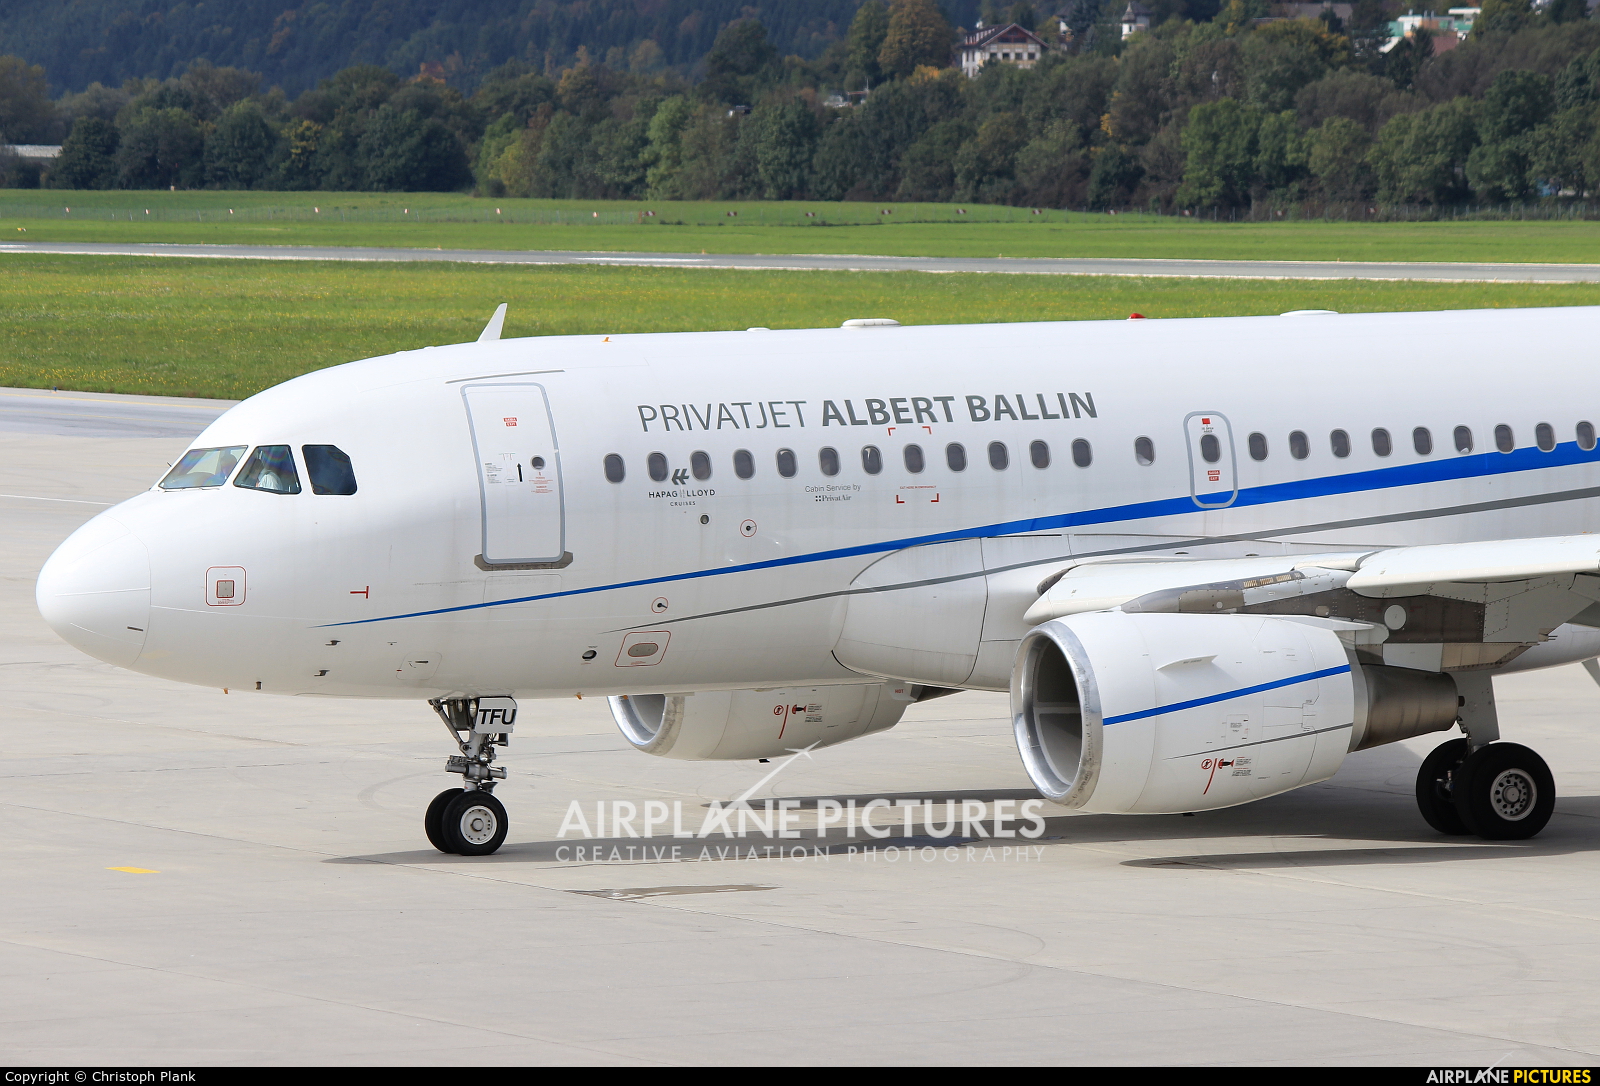 Cs Tfu White Airways Airbus A319 Cj At Innsbruck Photo Id Airplane Pictures Net